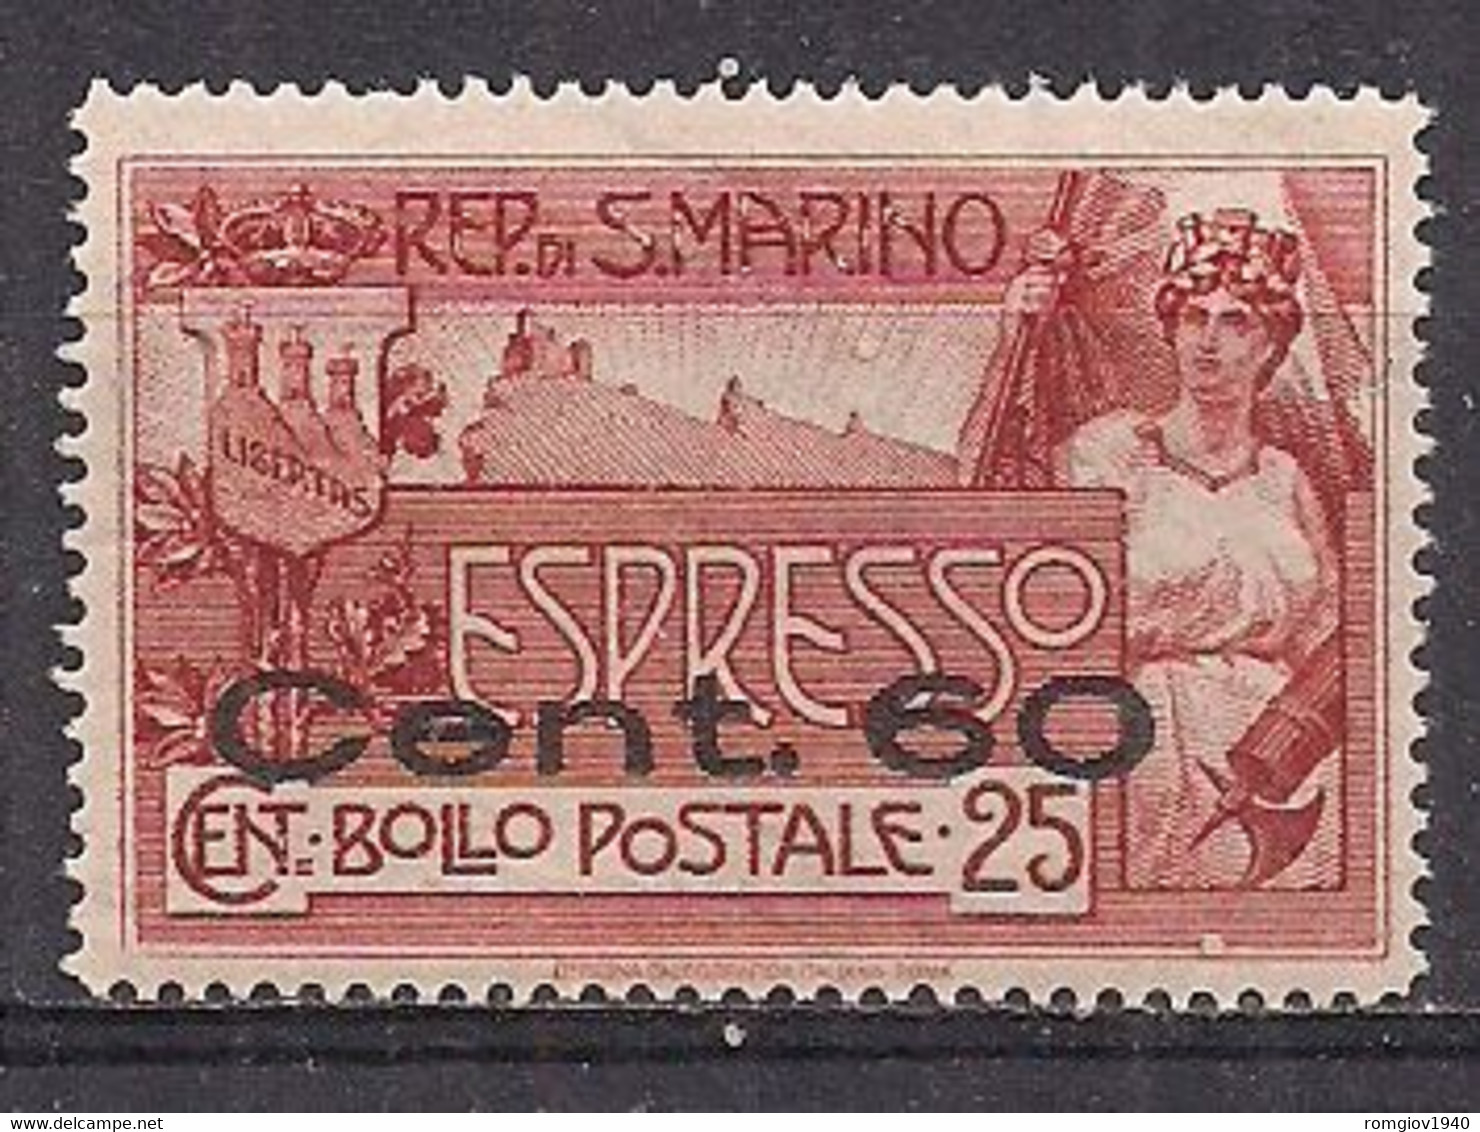 SAN MARINO 1923 ESPRESSI  FRANCOBOLLO SOPRASTAMPATO SASS. 3 MLH VF - Express Letter Stamps